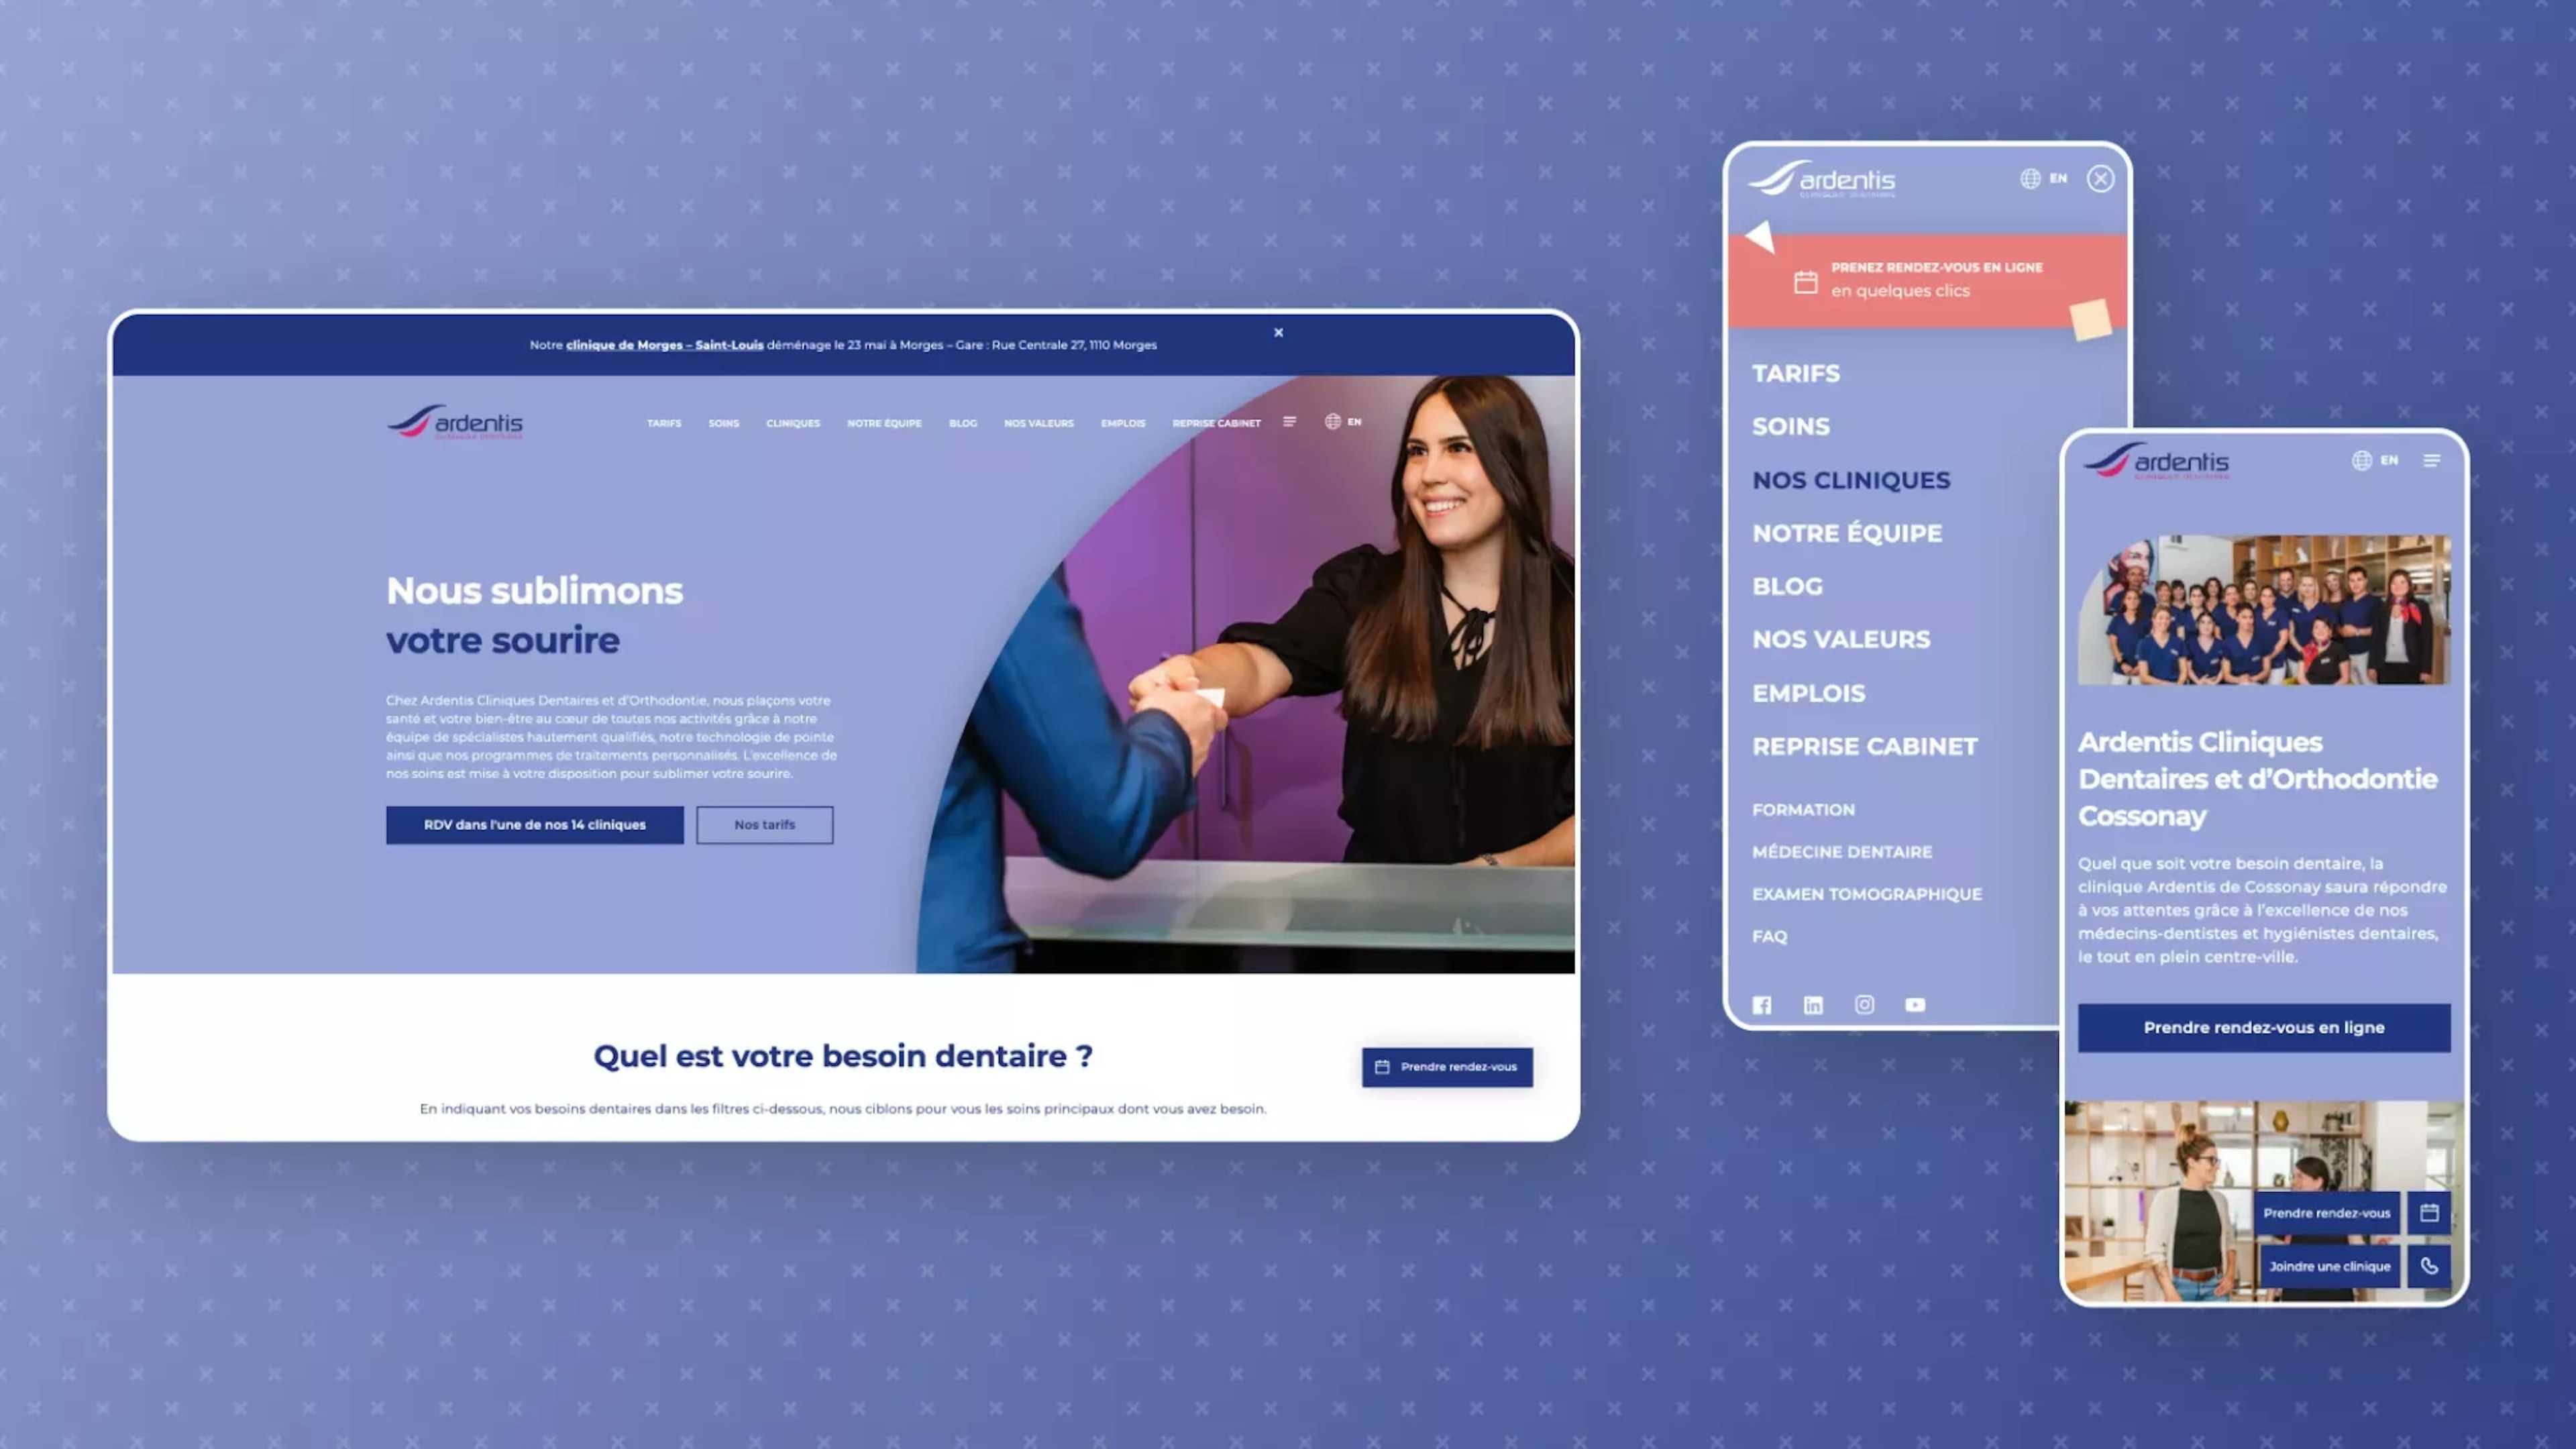 Ardentis website homepage